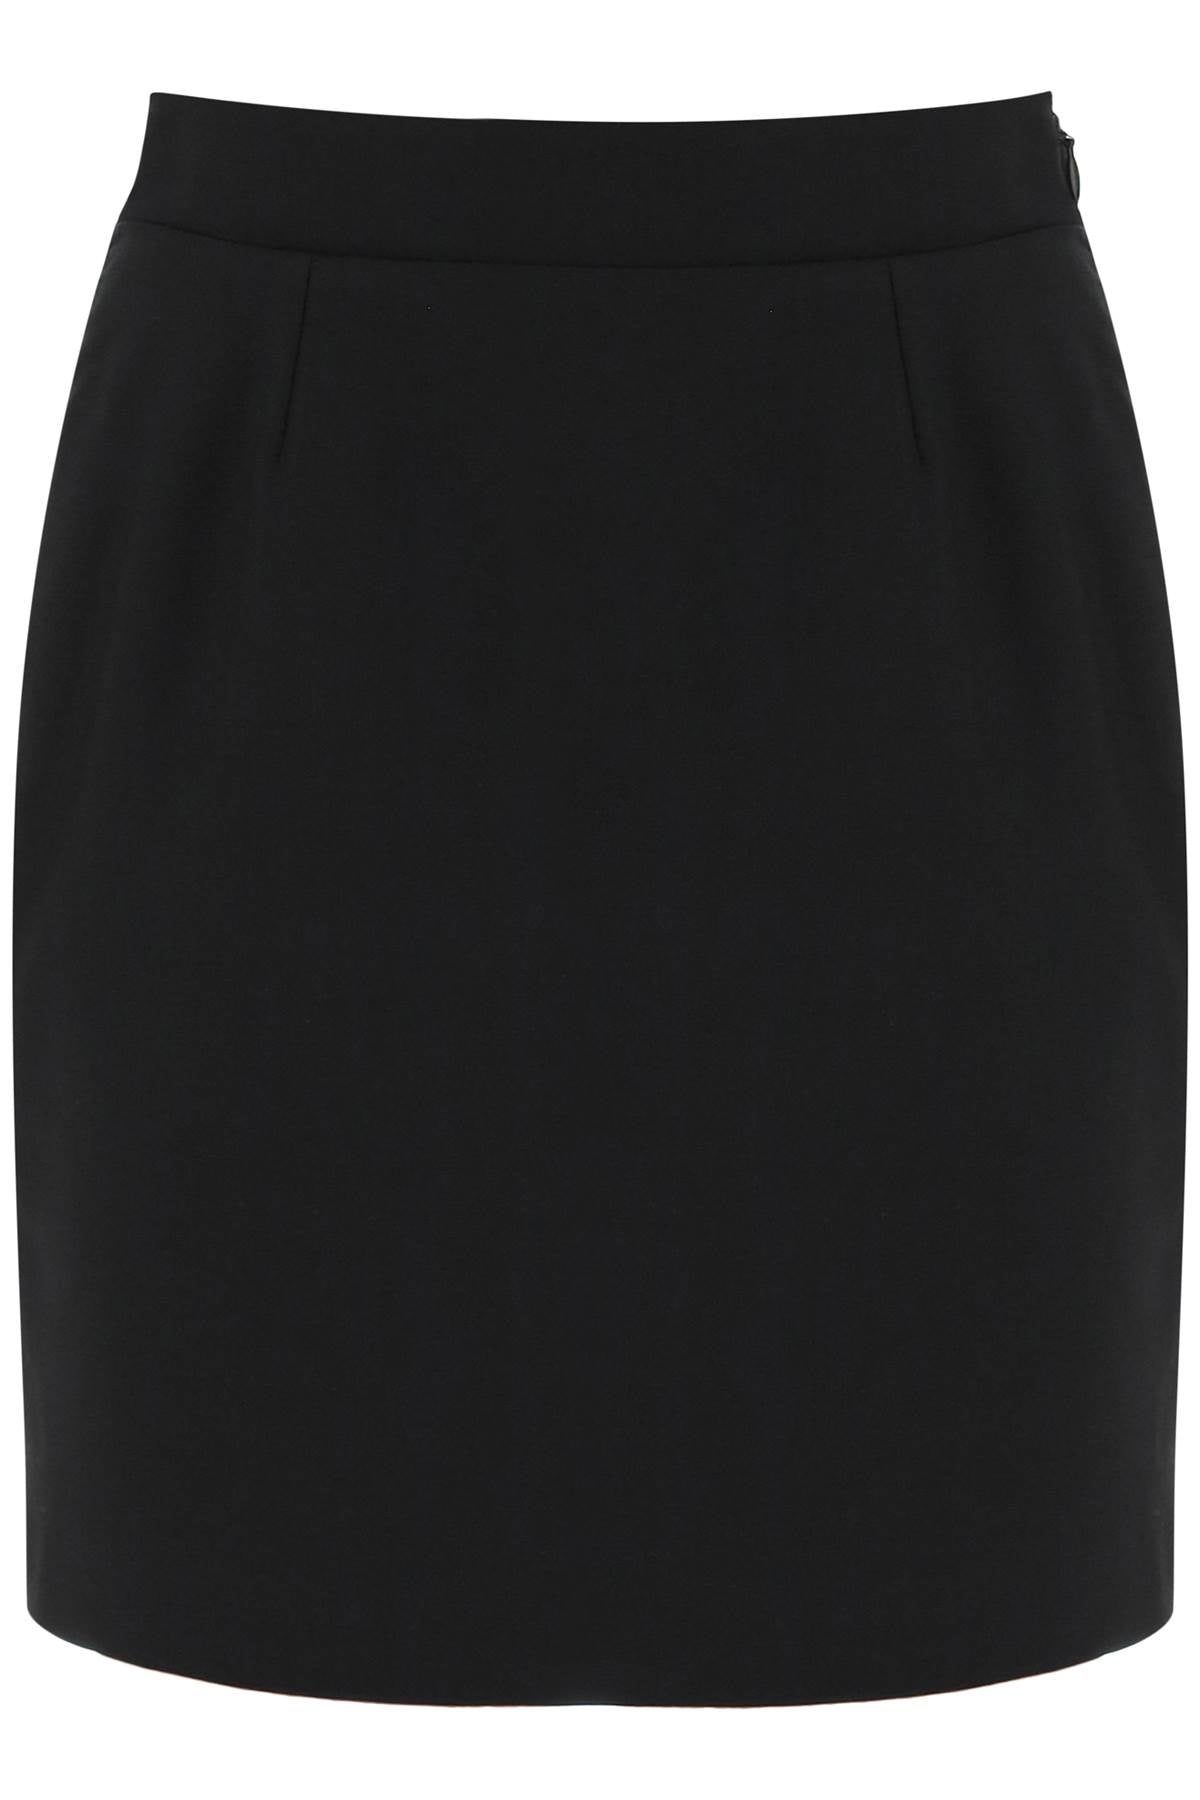 Mvp wardrobe waldorf skirt-0